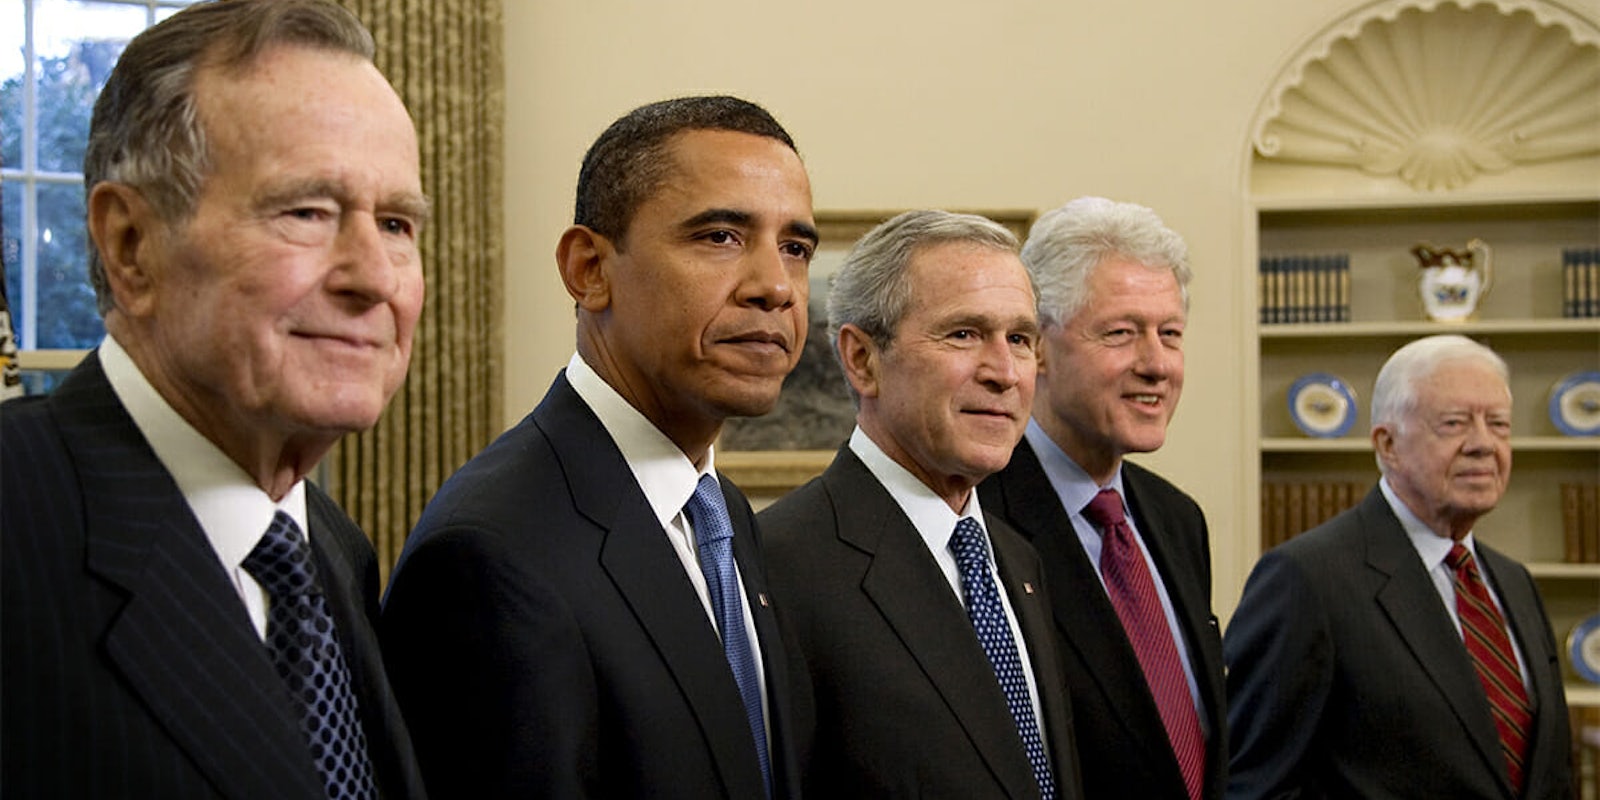 one america appeal: George HW Bush, Barack Obama, George W Bush, Bill Clinton, and Jimmy Carter